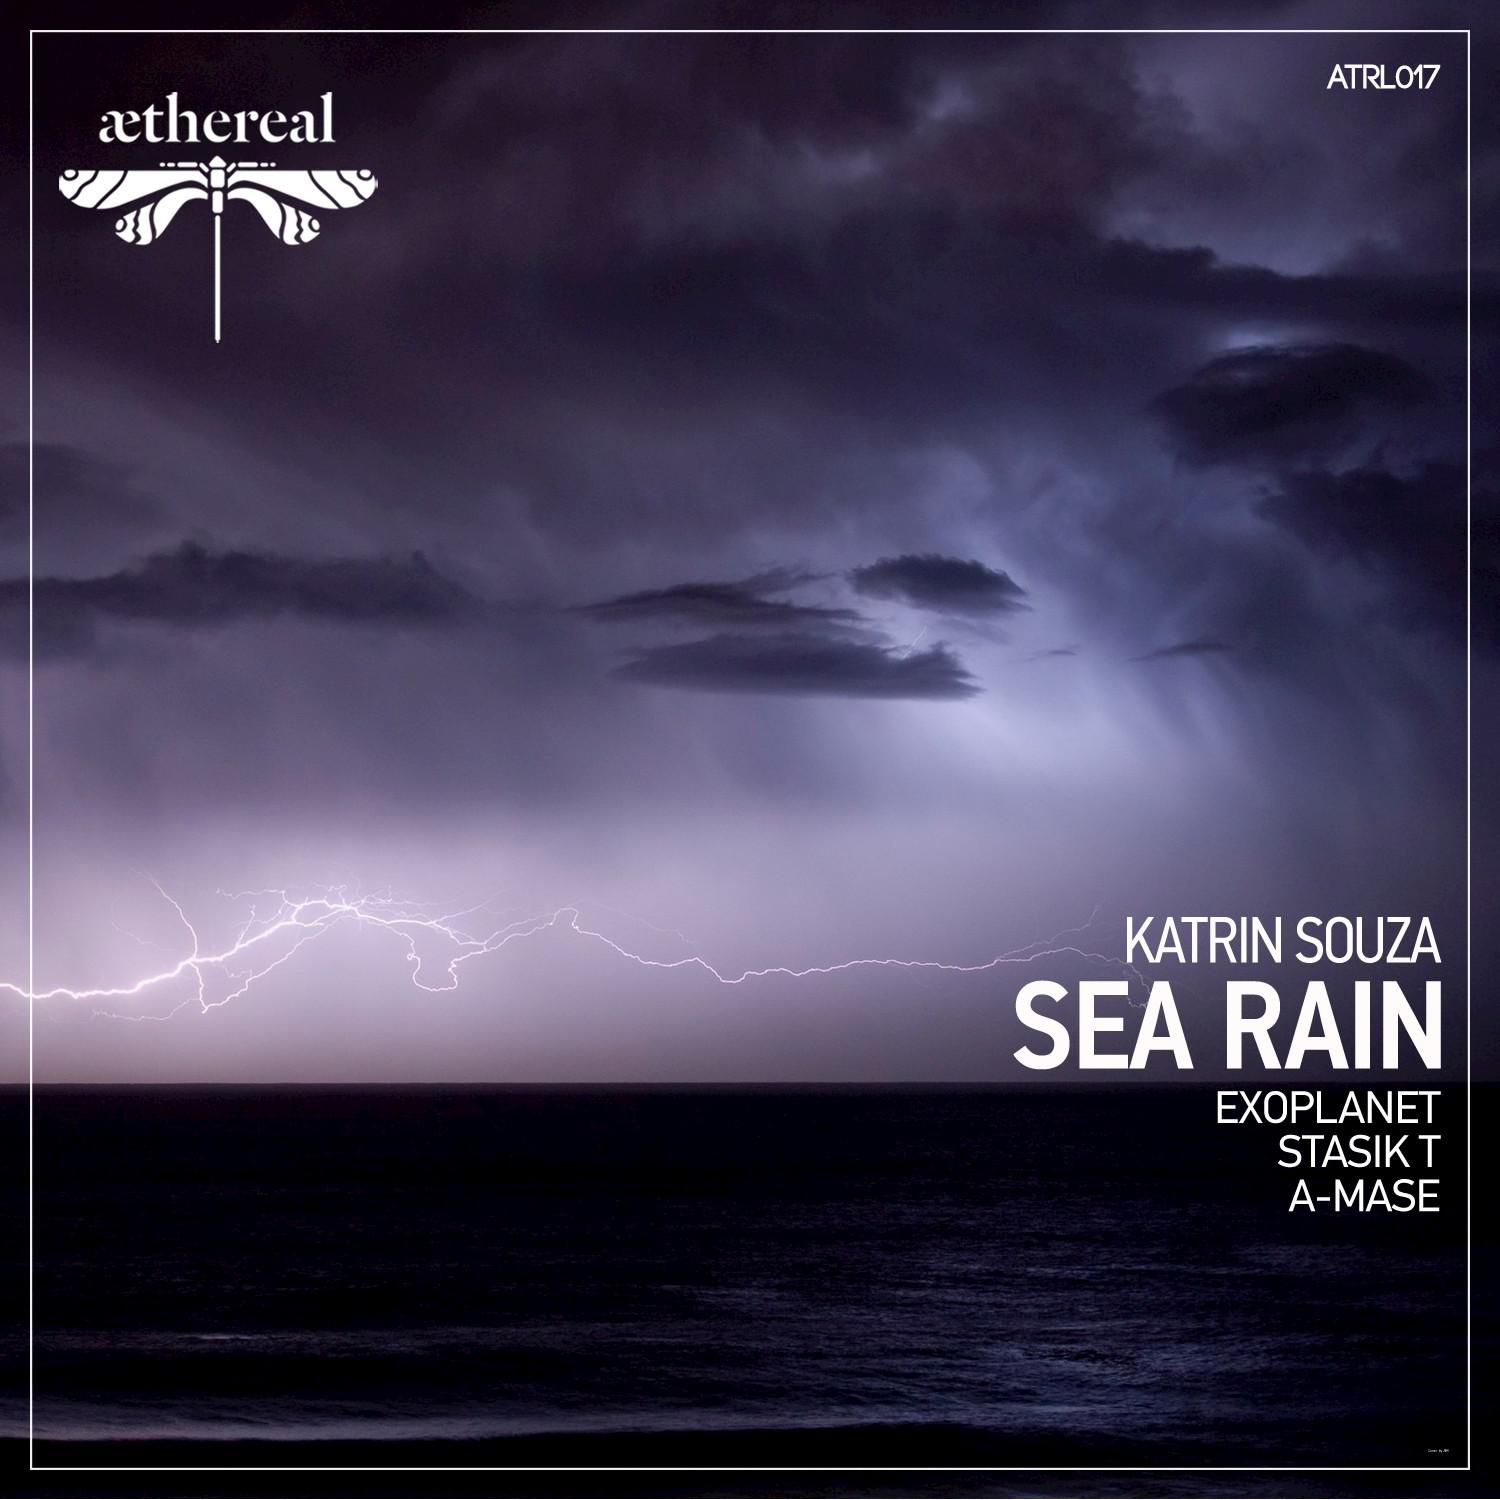 Sea Rain (Stasik T Remix)